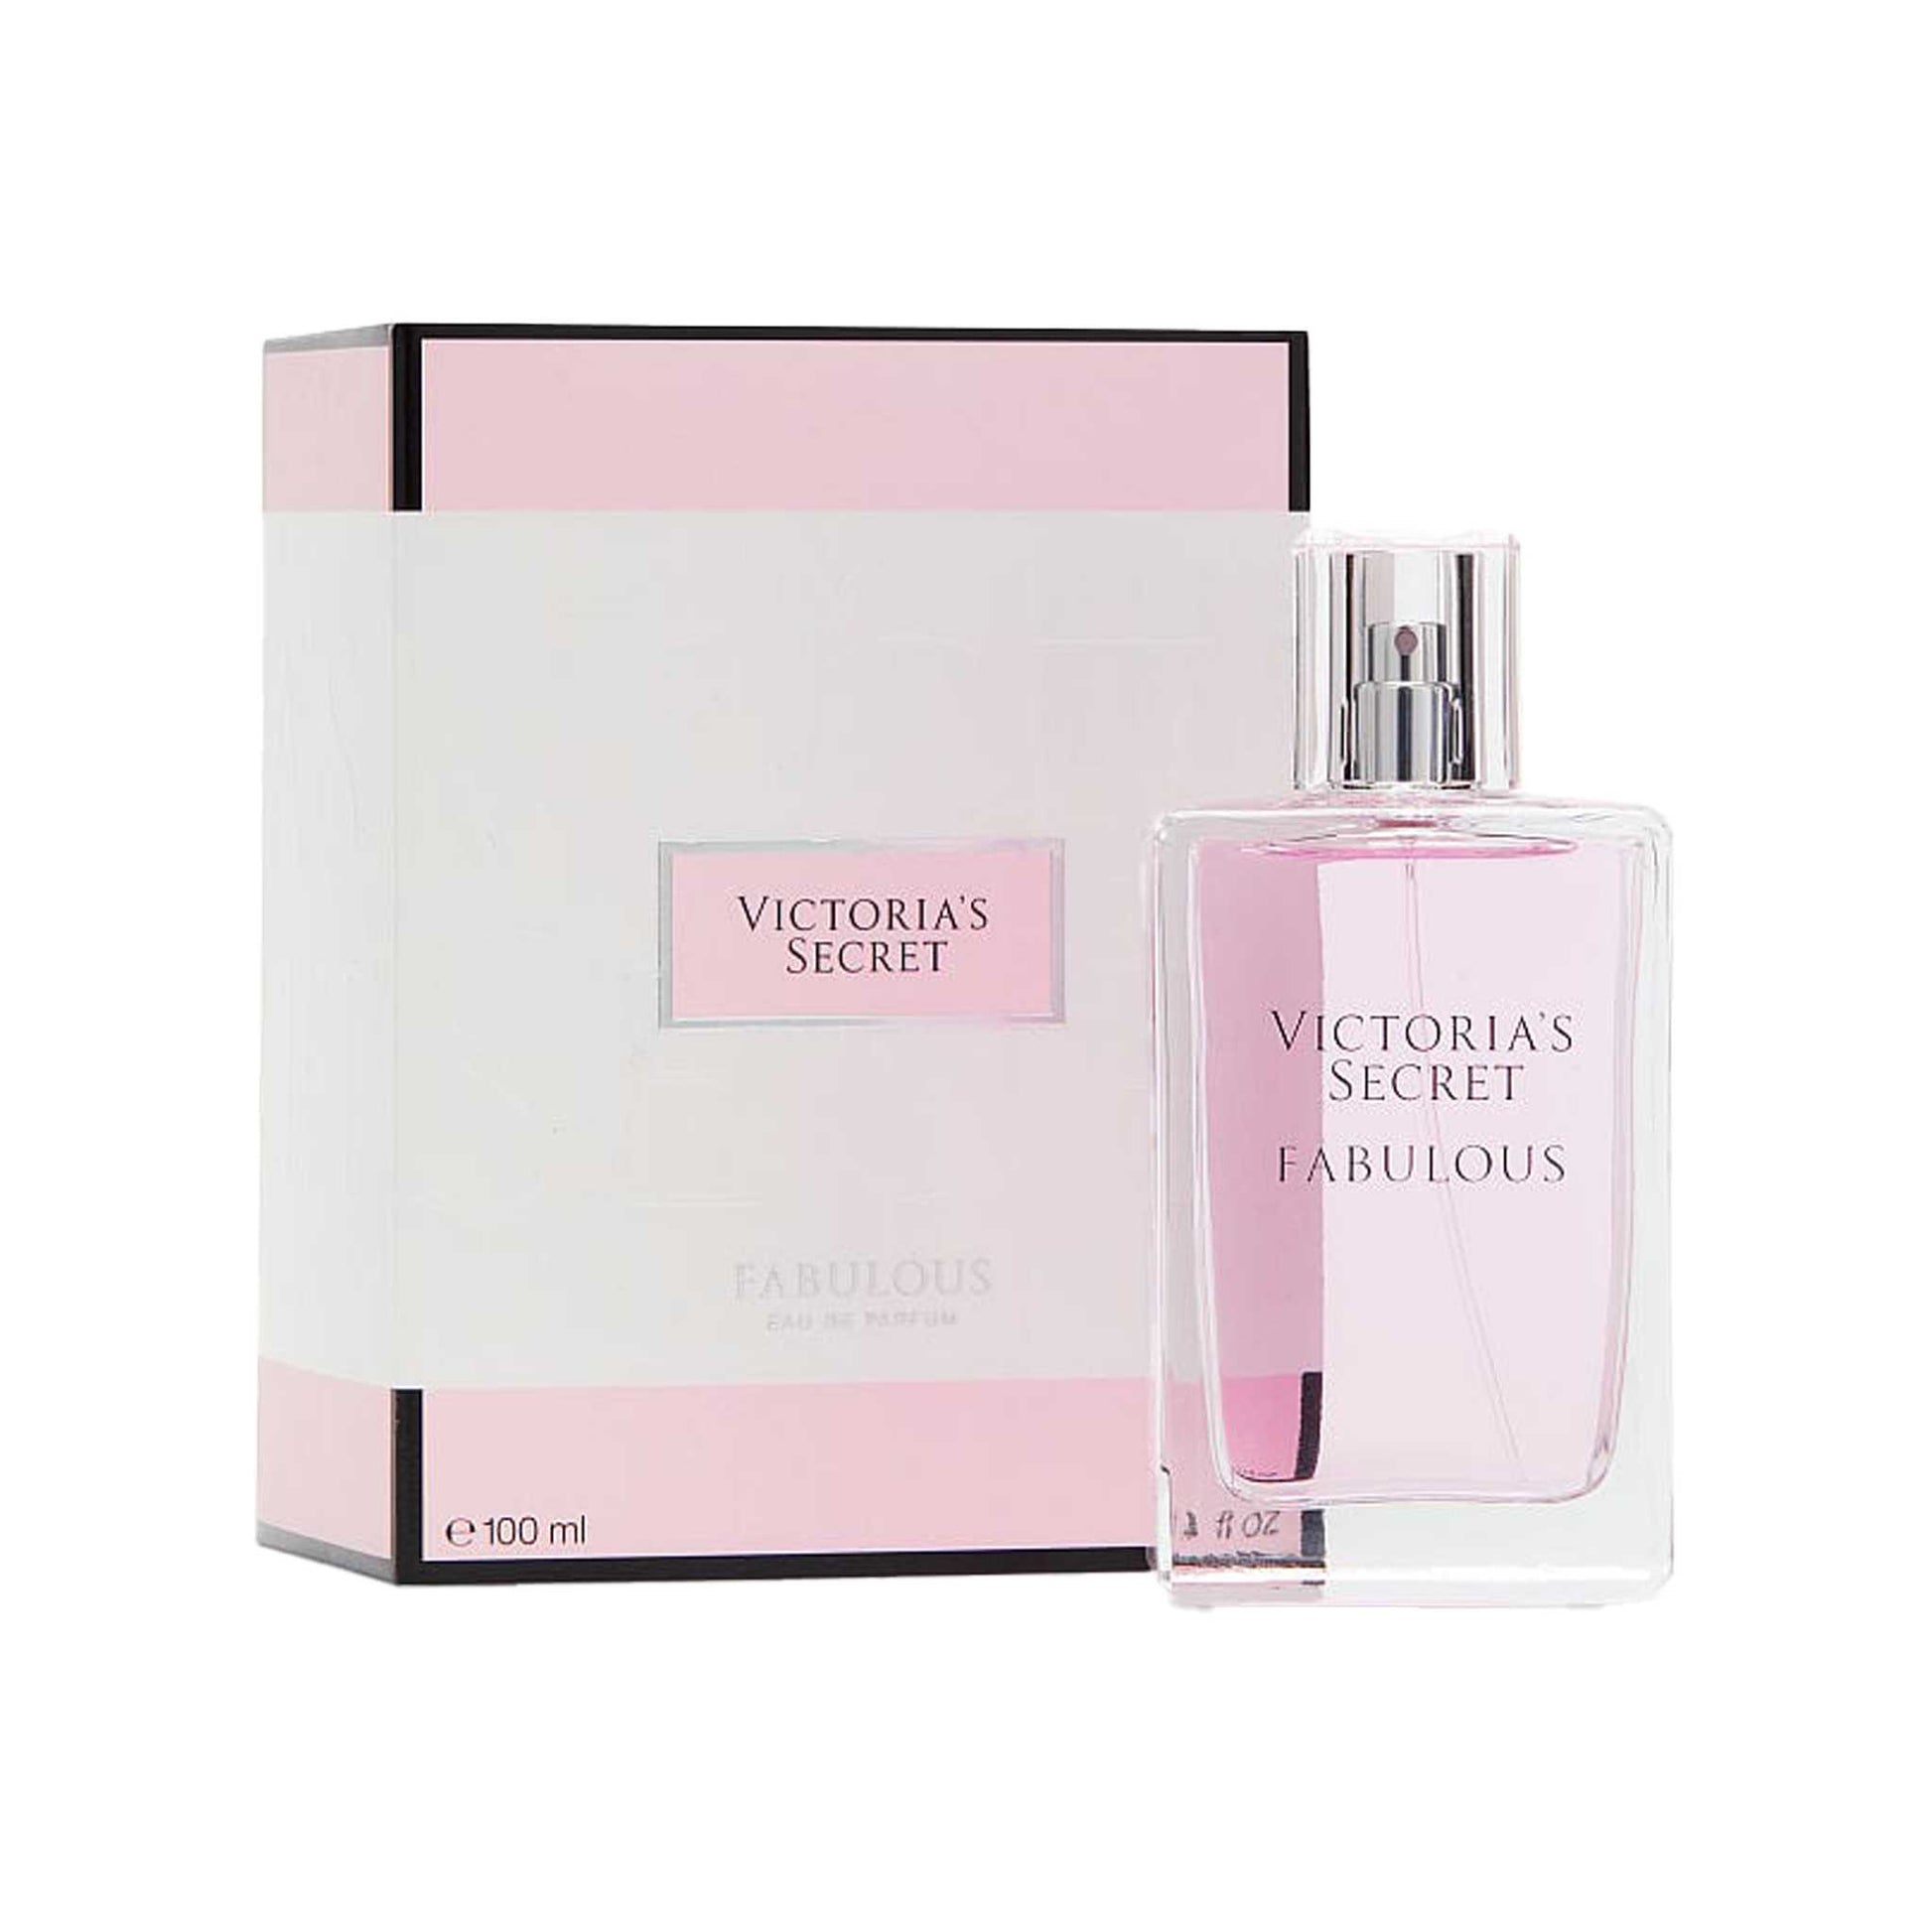 VICTORIA'S SECRET FABULOUS PERFUME 100 ML Victoria's Secret